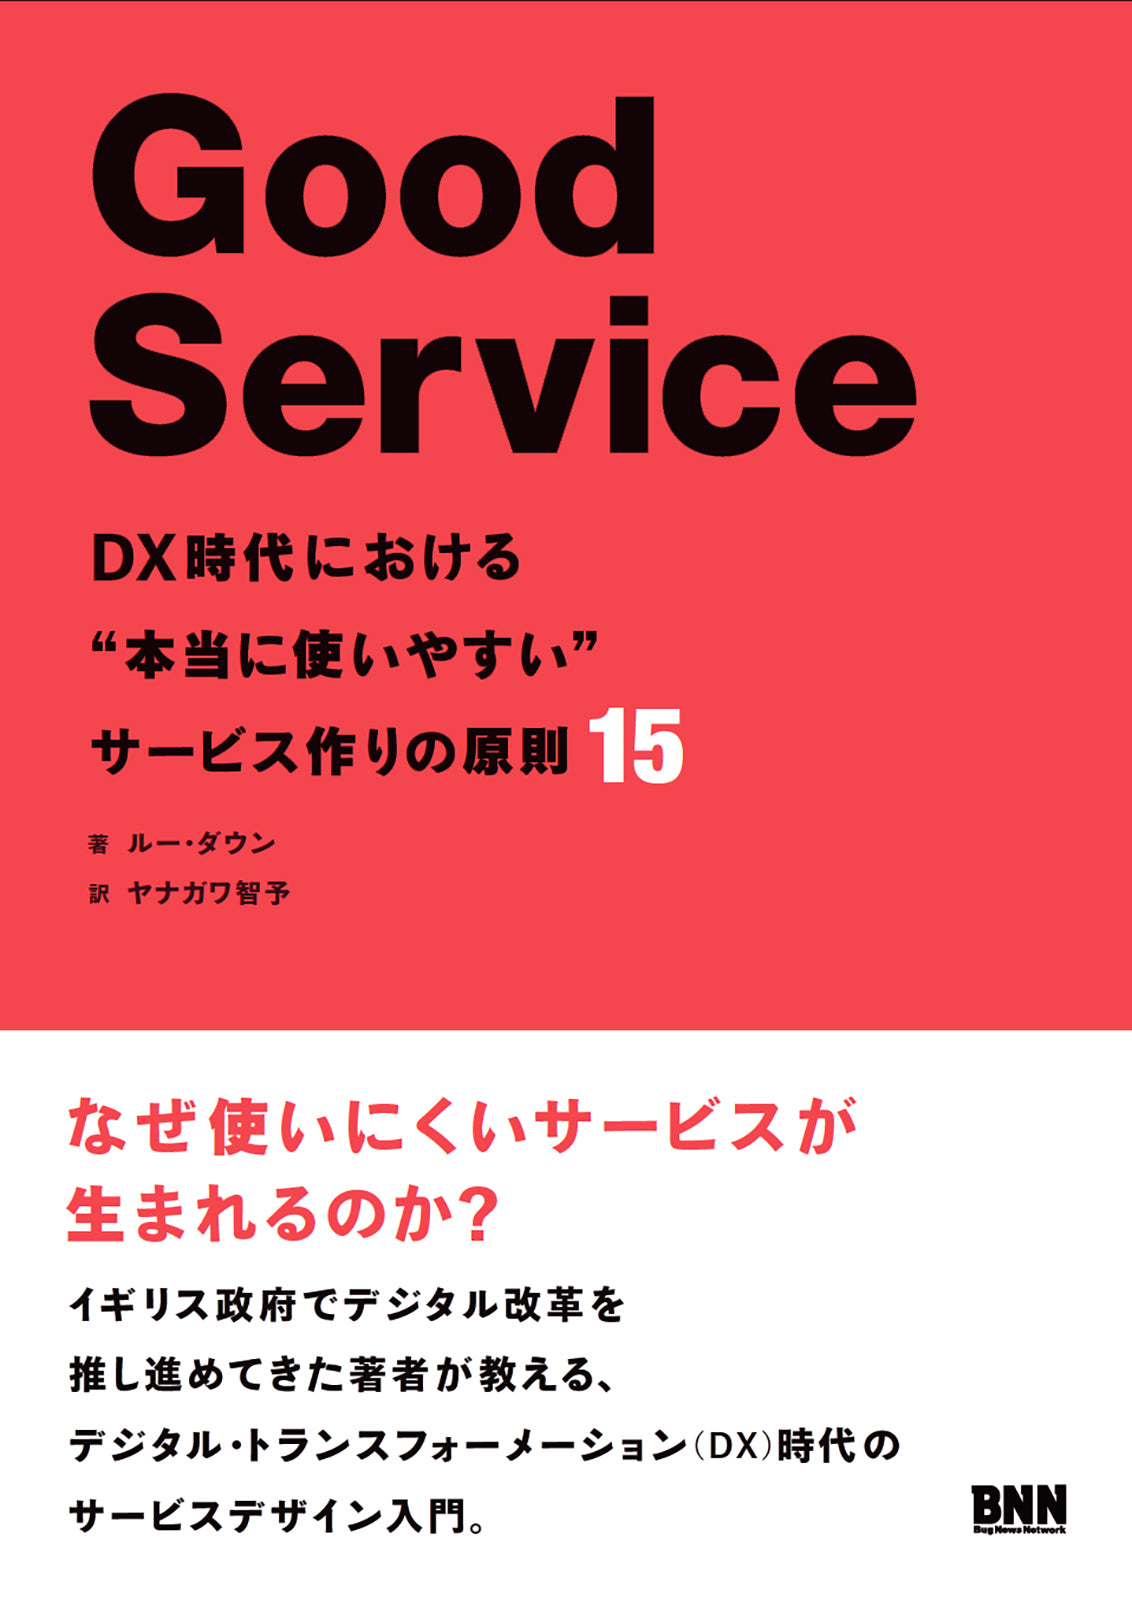 This is Service Design Doing - サービスデザインの実践 | 株式会社 